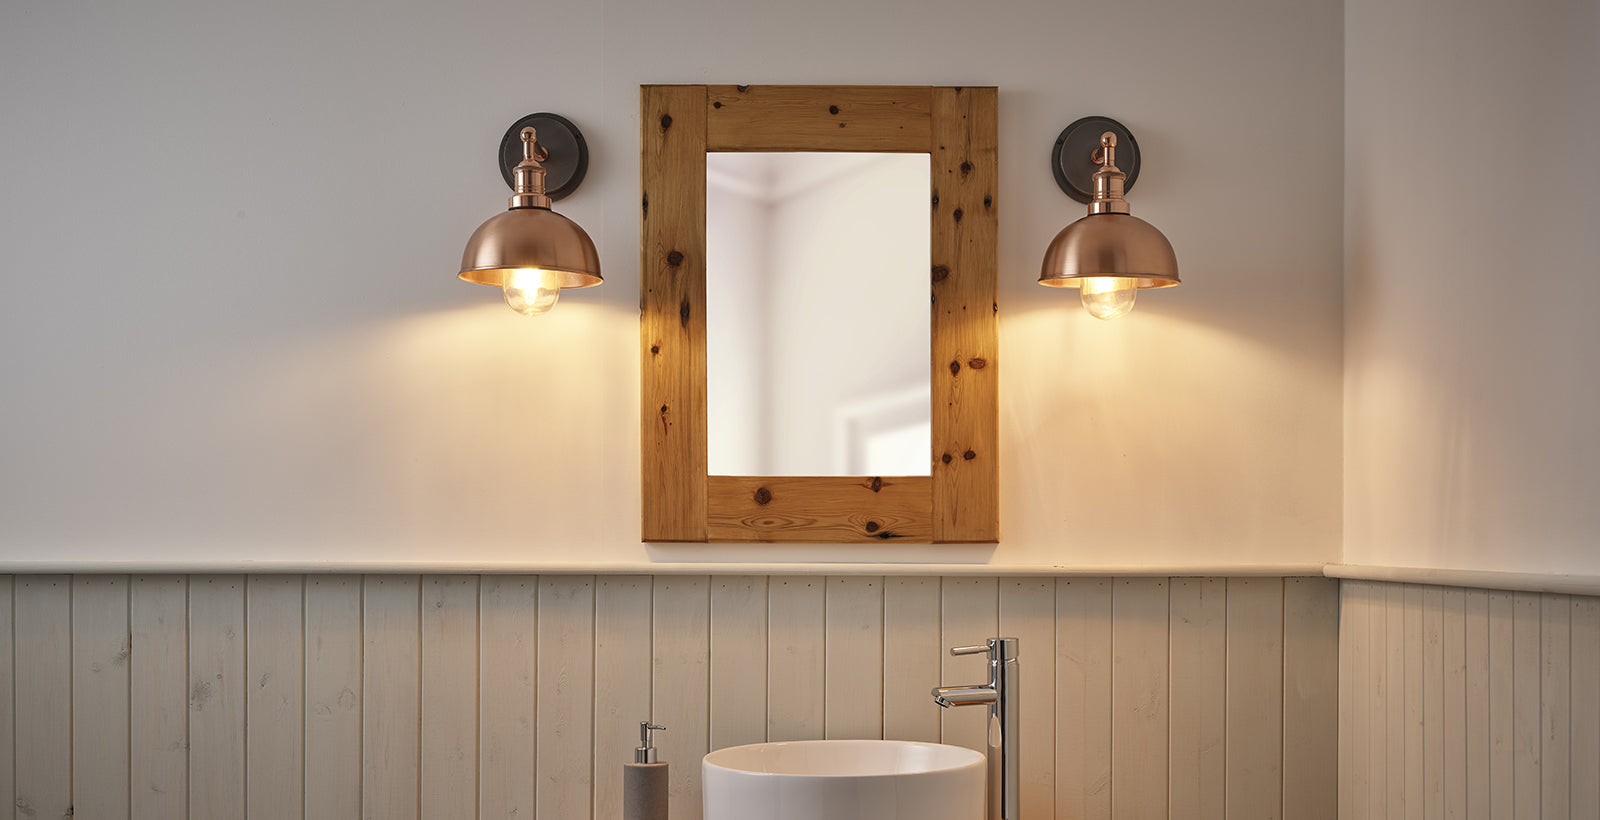 industrial style lights in a bathroom interior design